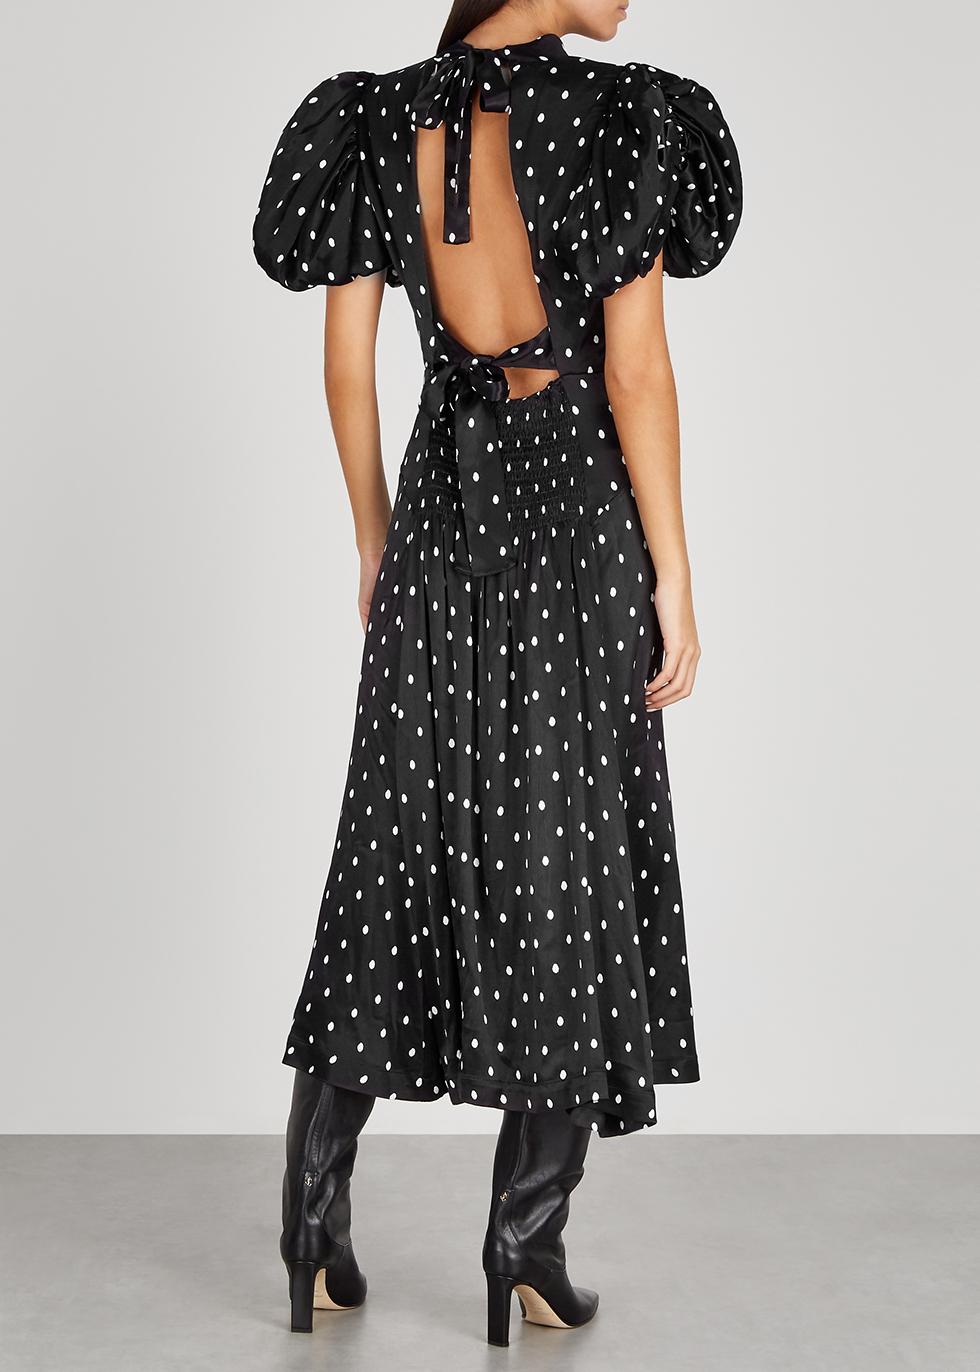 black polka dot dress